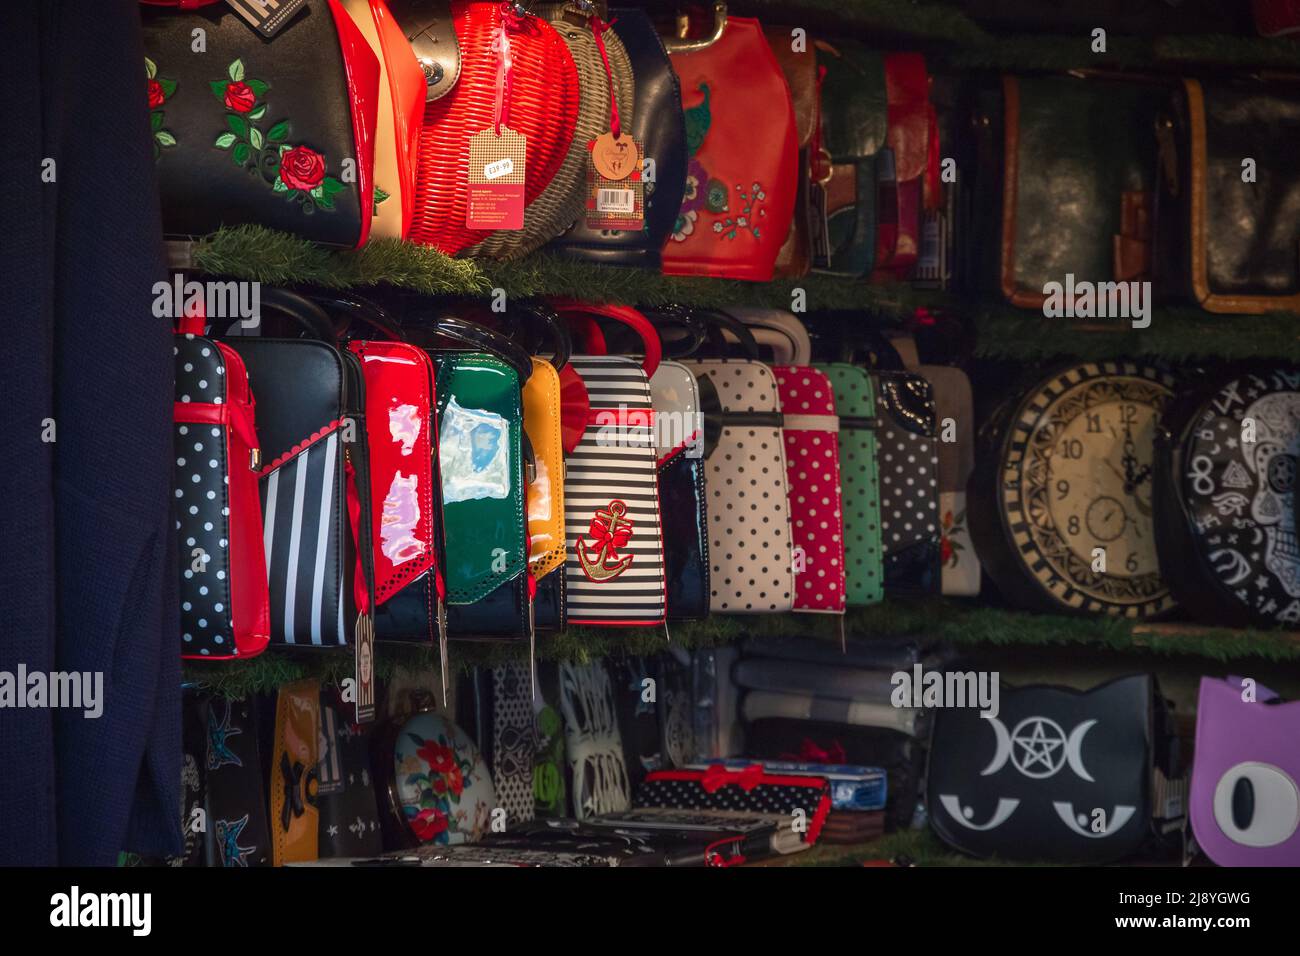 London, UK - December 2, 2021 - Leather handcraft bags on display at Christmas market Hyde Park Winter Wonderland Stock Photo